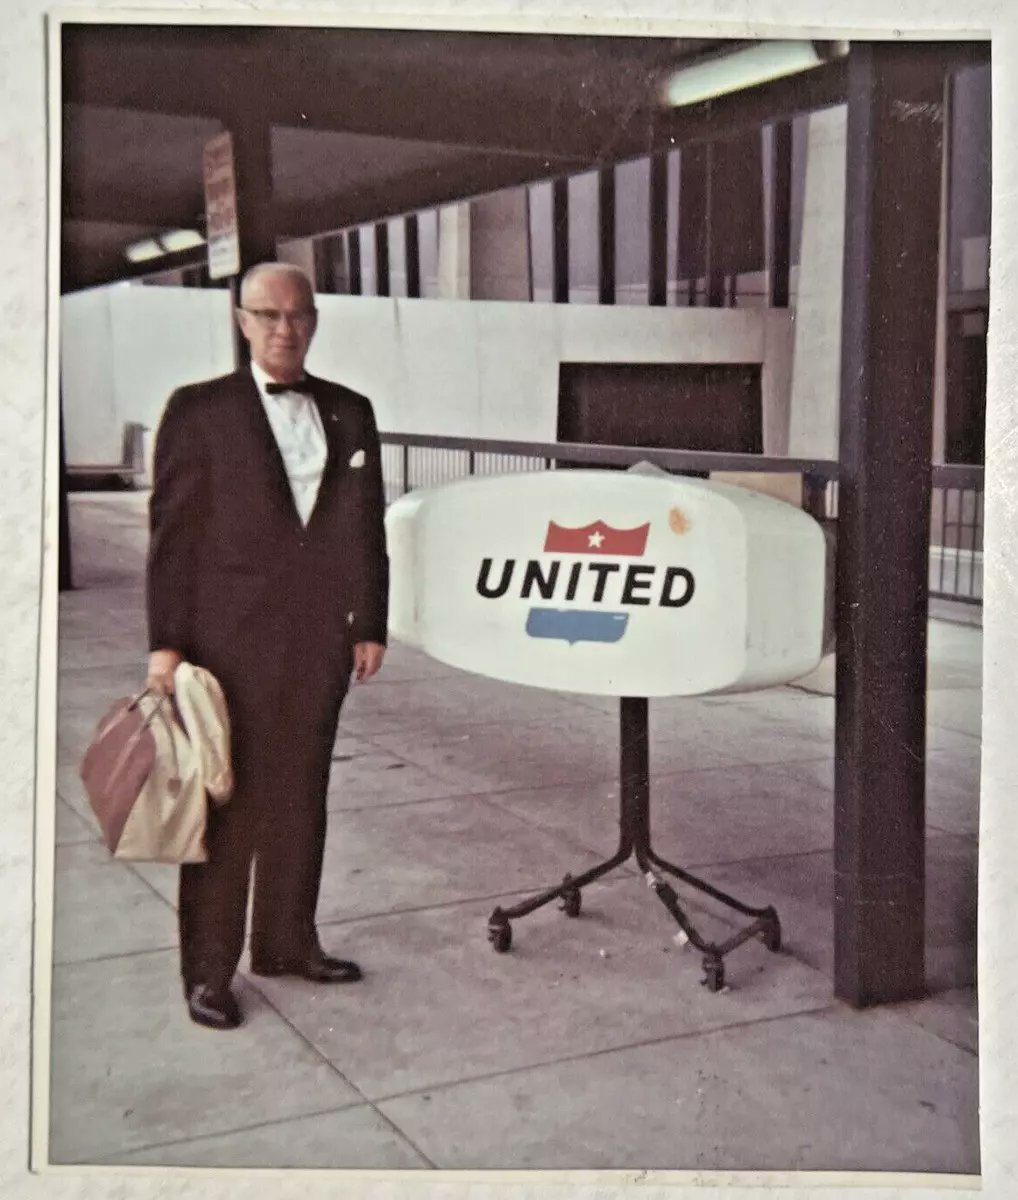 United Airlines - Logan Airport 1969. @BostonLogan @united